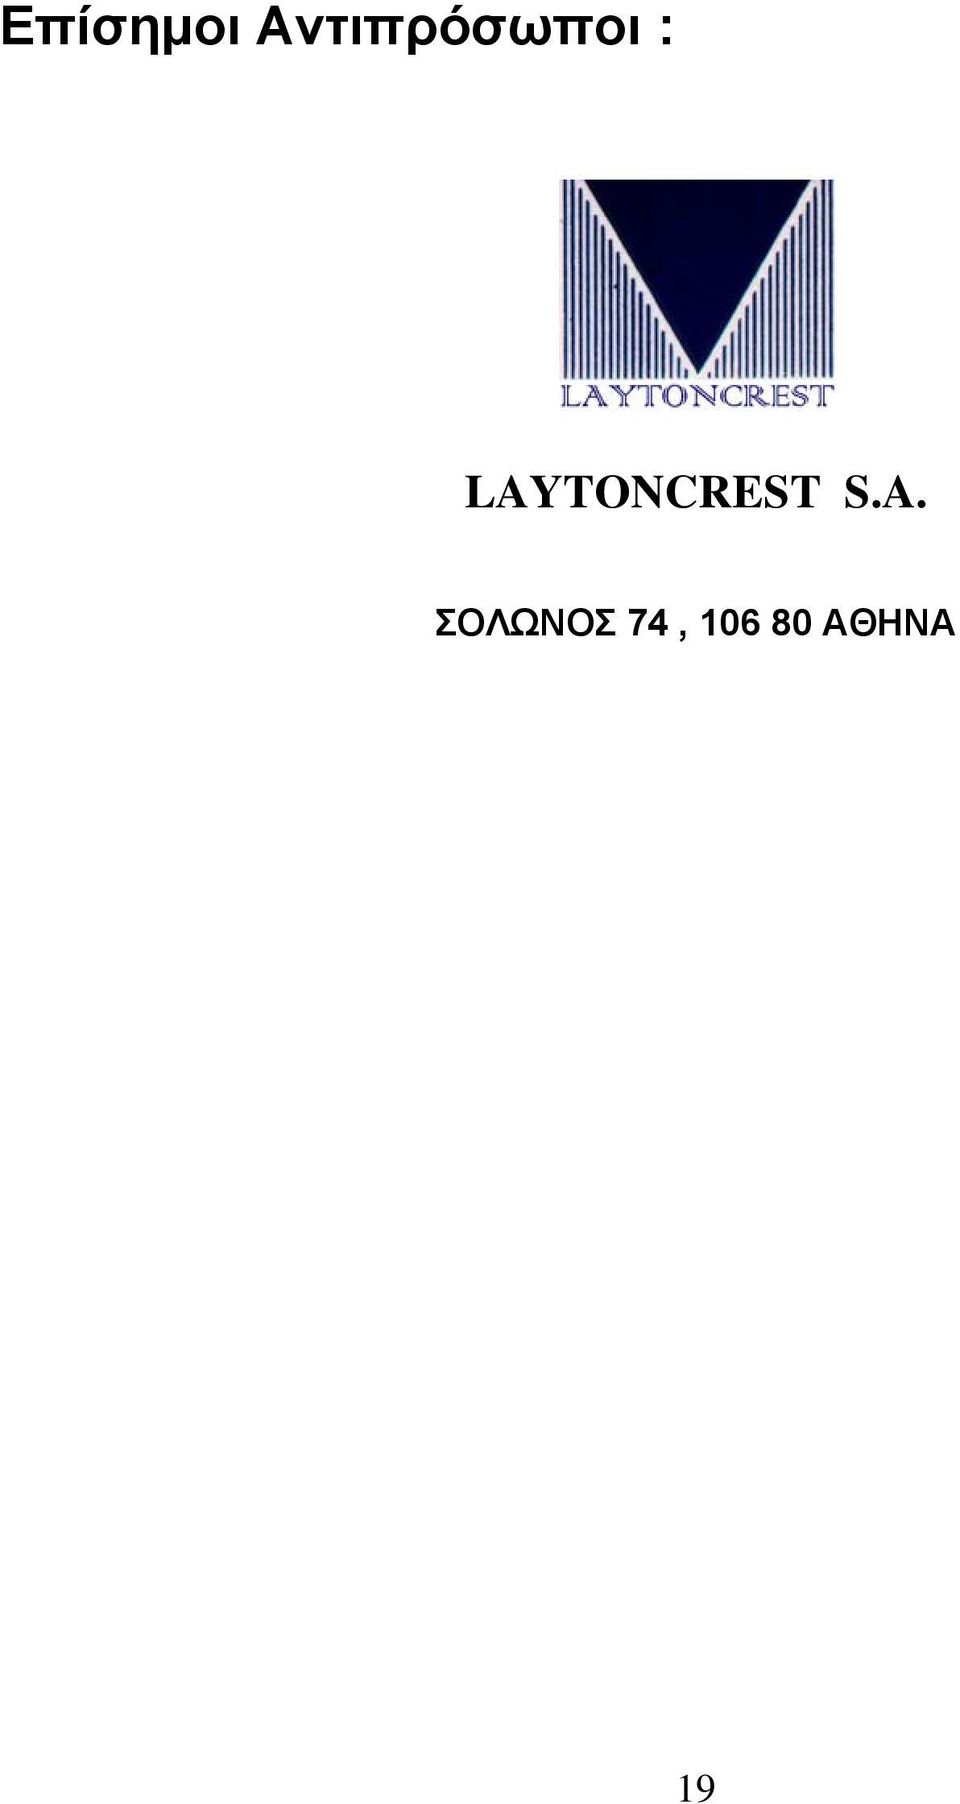 LAYTONCREST S.A.